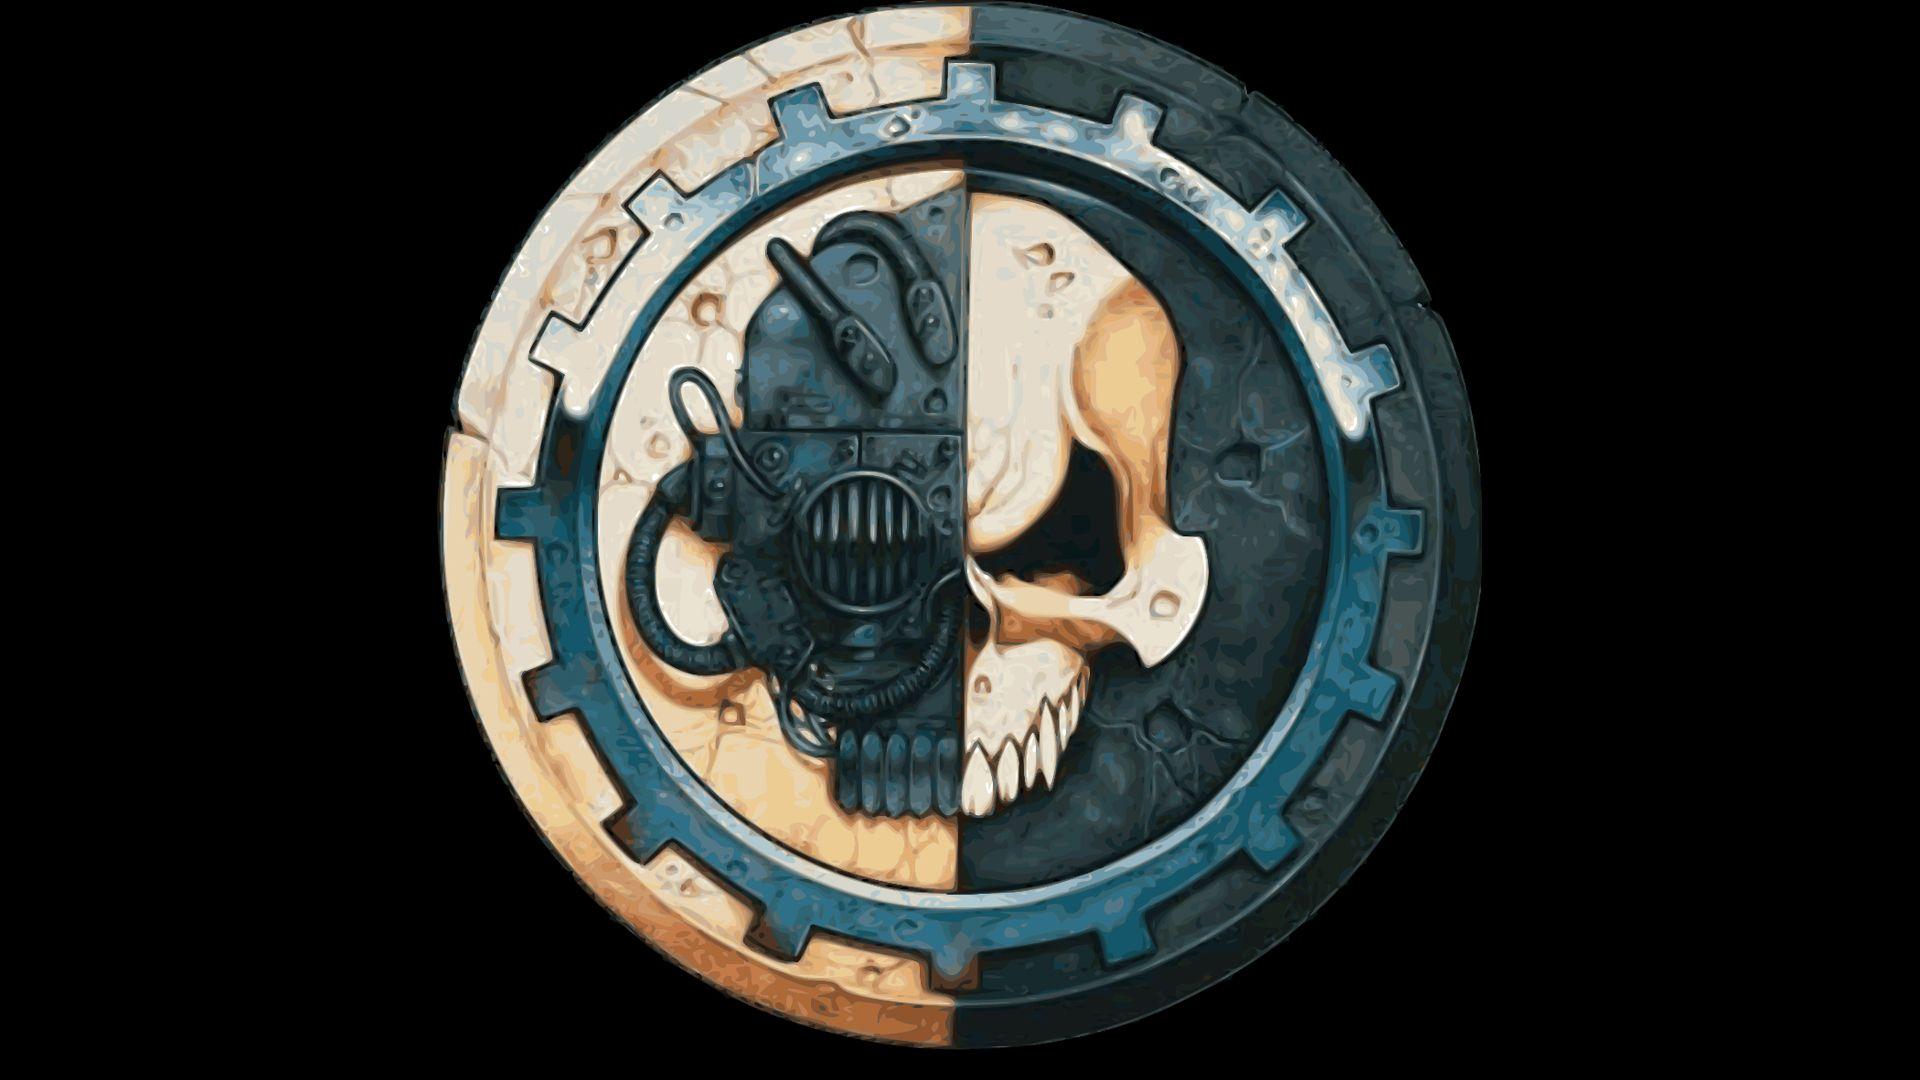 Download the Cyborg Skull Wallpaper, Cyborg Skull iPhone Wallpaper